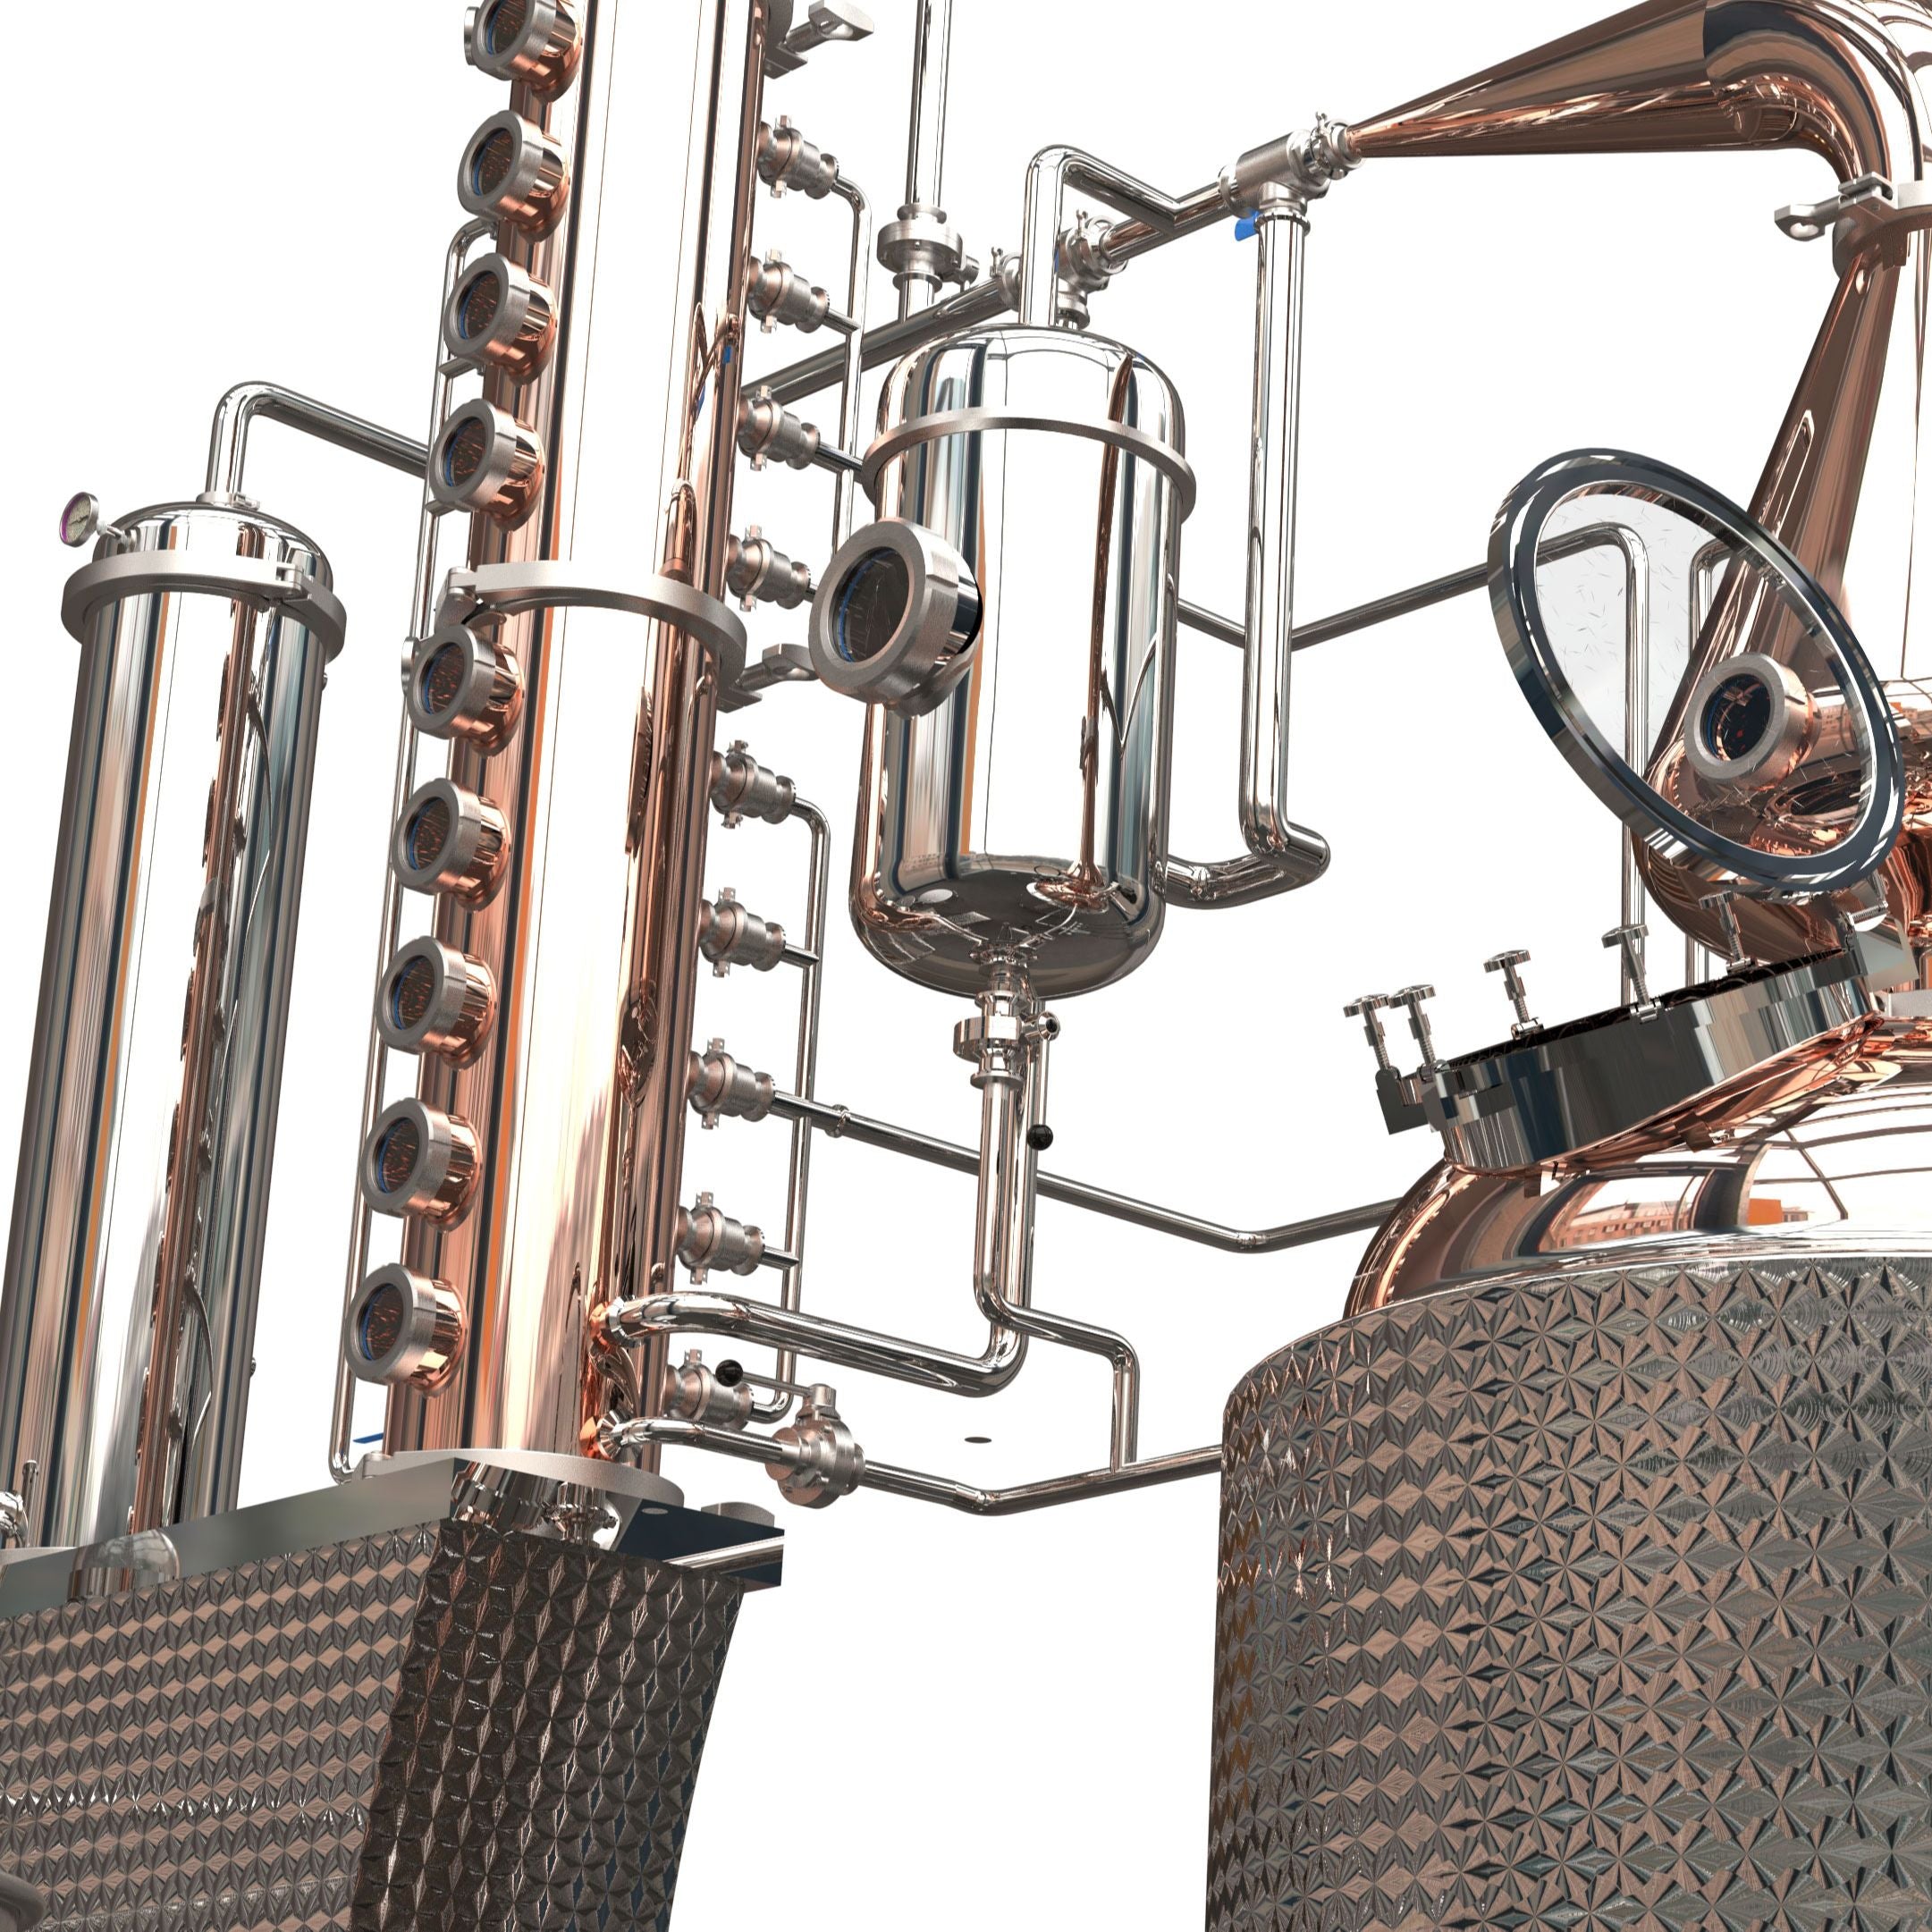 500L Hooloo Classic Distillation System